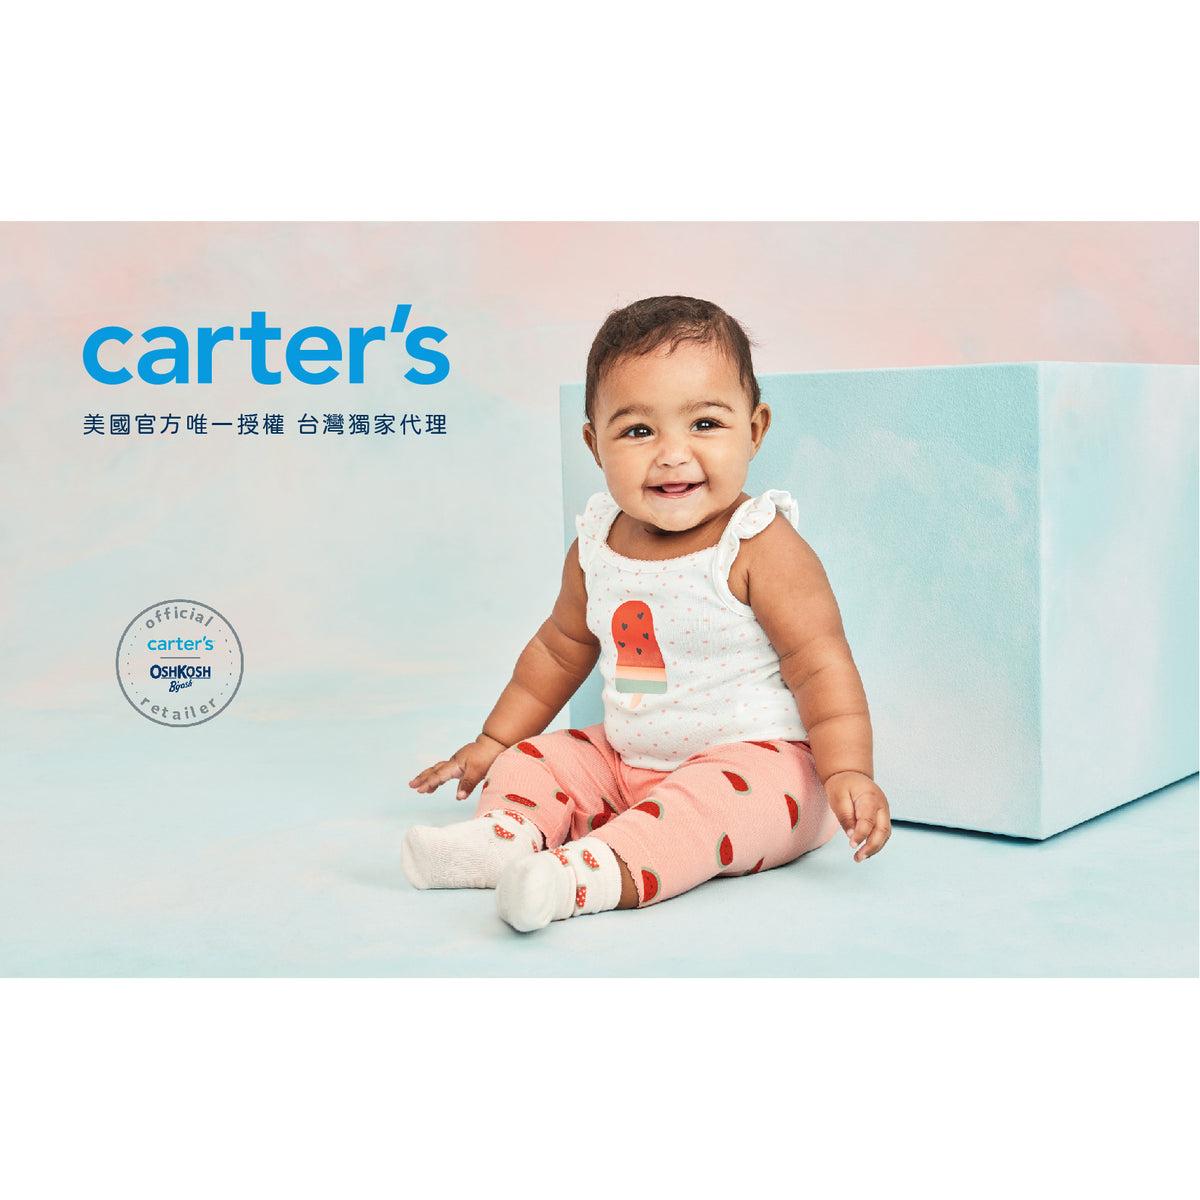 Carter's 櫻桃甜心連身褲(6M-24M)